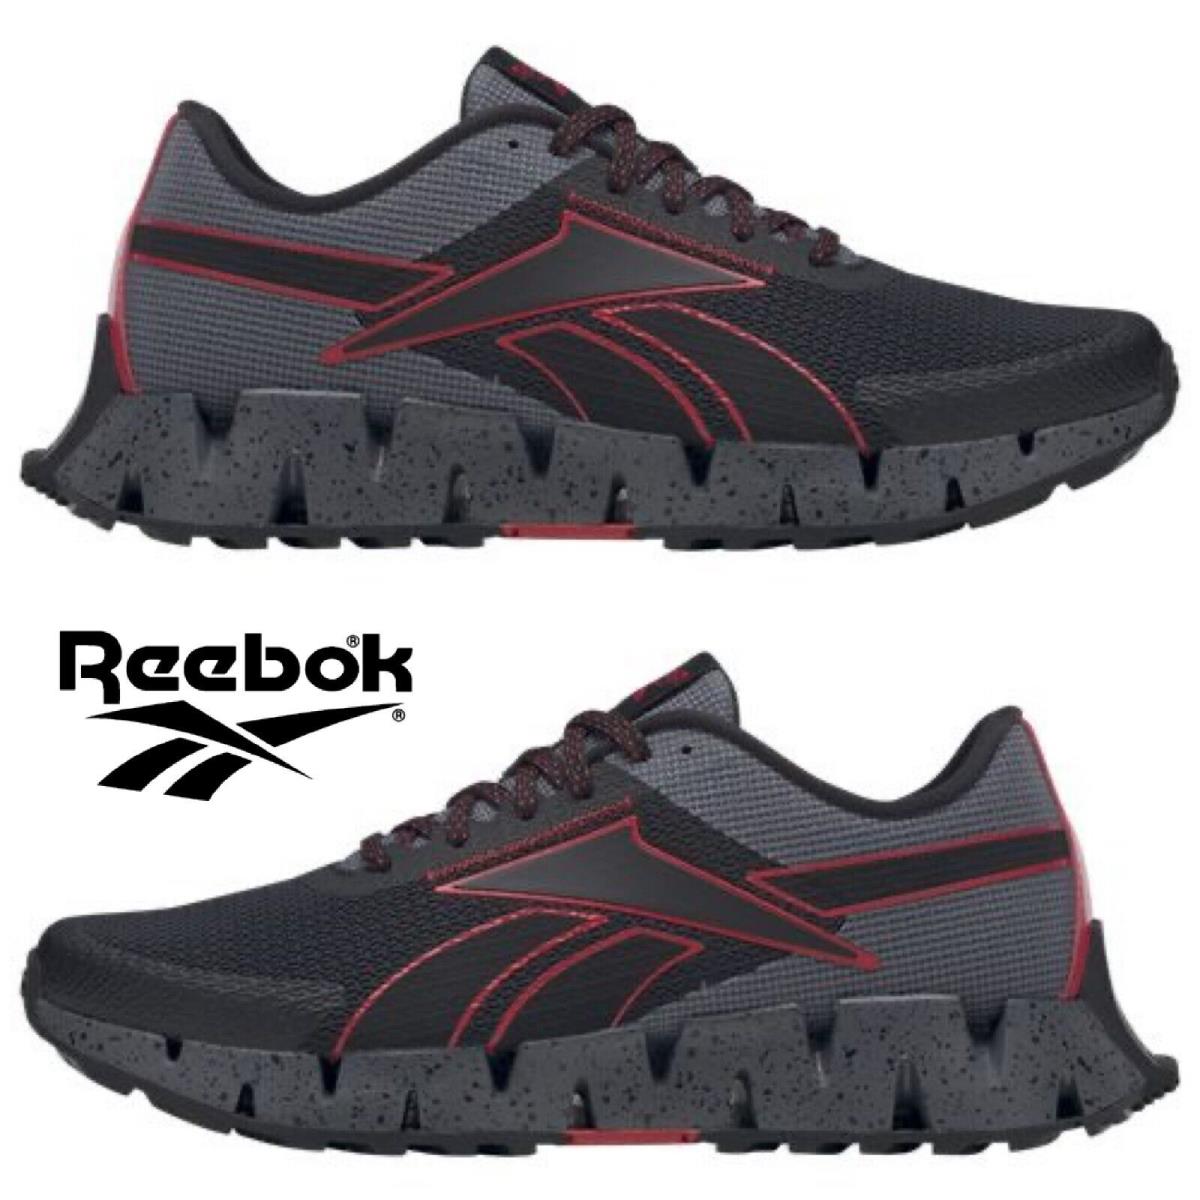 Reebok Zig Dynamica 2 Adventure Men`s Sneakers Hiking Walking Running Shoes - Black , Core Black/Vector Red/Cold Grey 6 Manufacturer